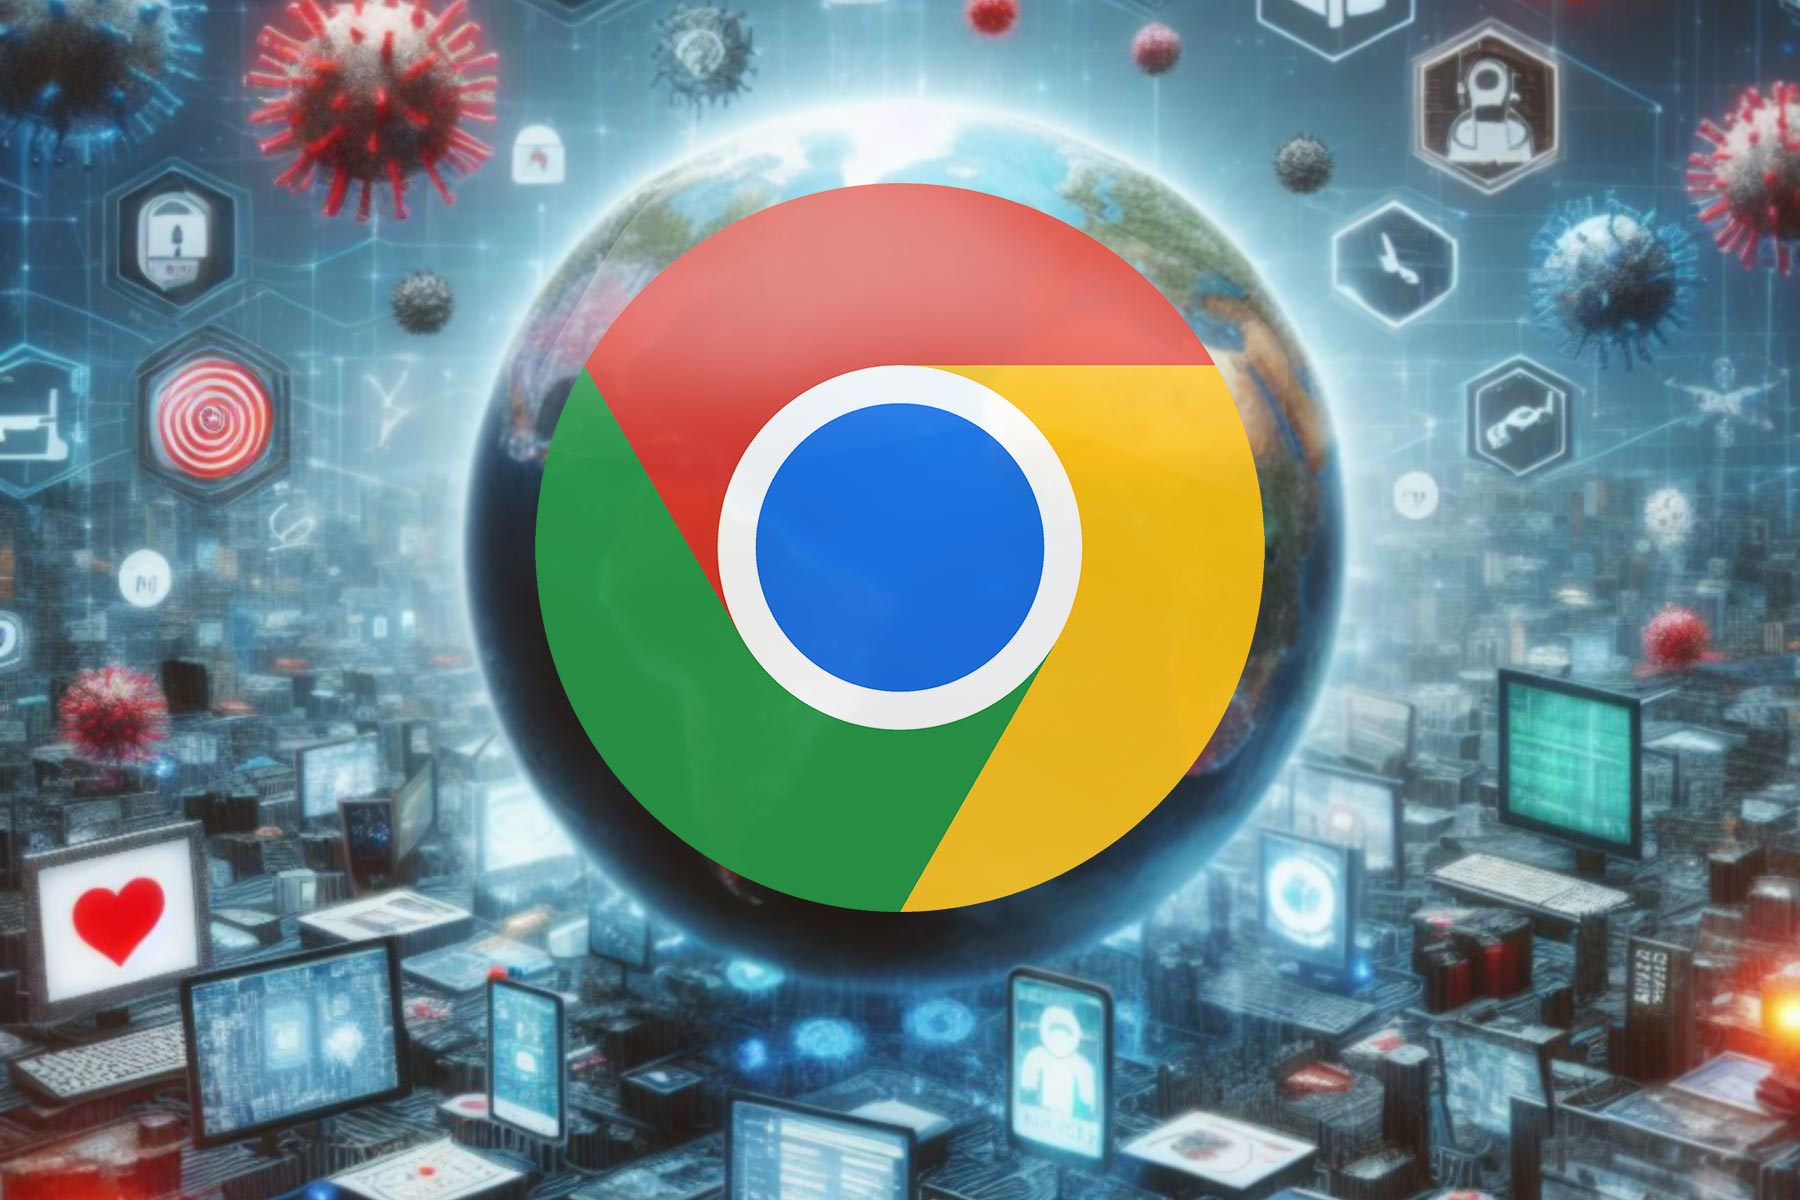 Google is testing port randomization in Chrome in effort to stop network attacks